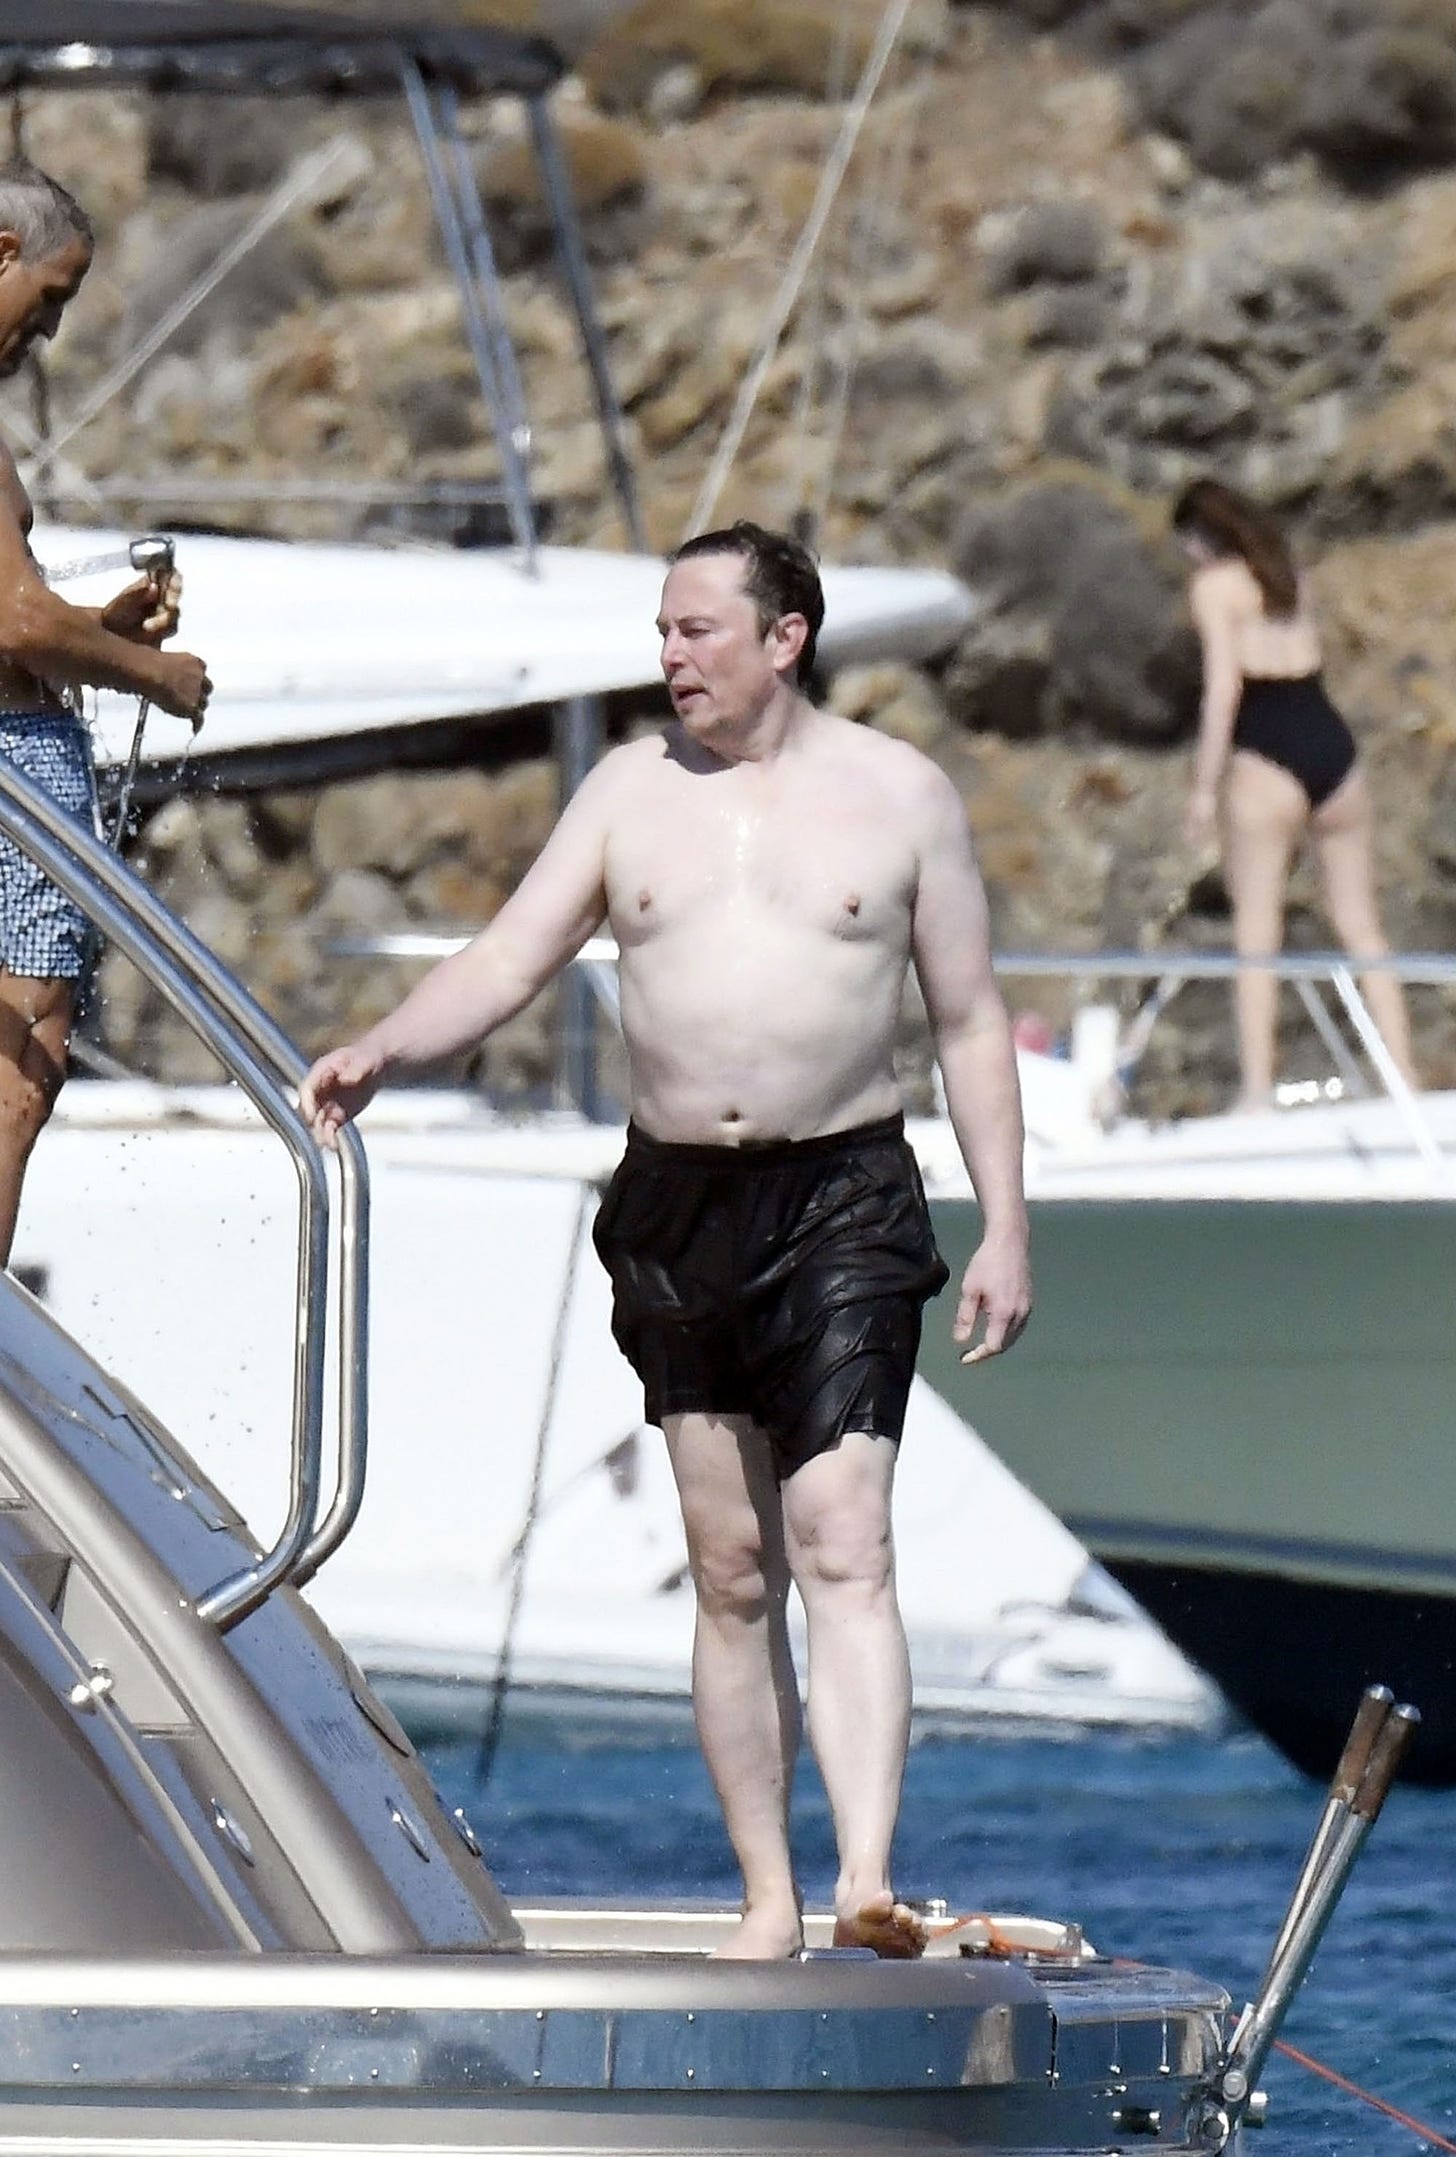 Elon Musk responds to pics of him shirtless in Mykonos: 'Free the nip!'